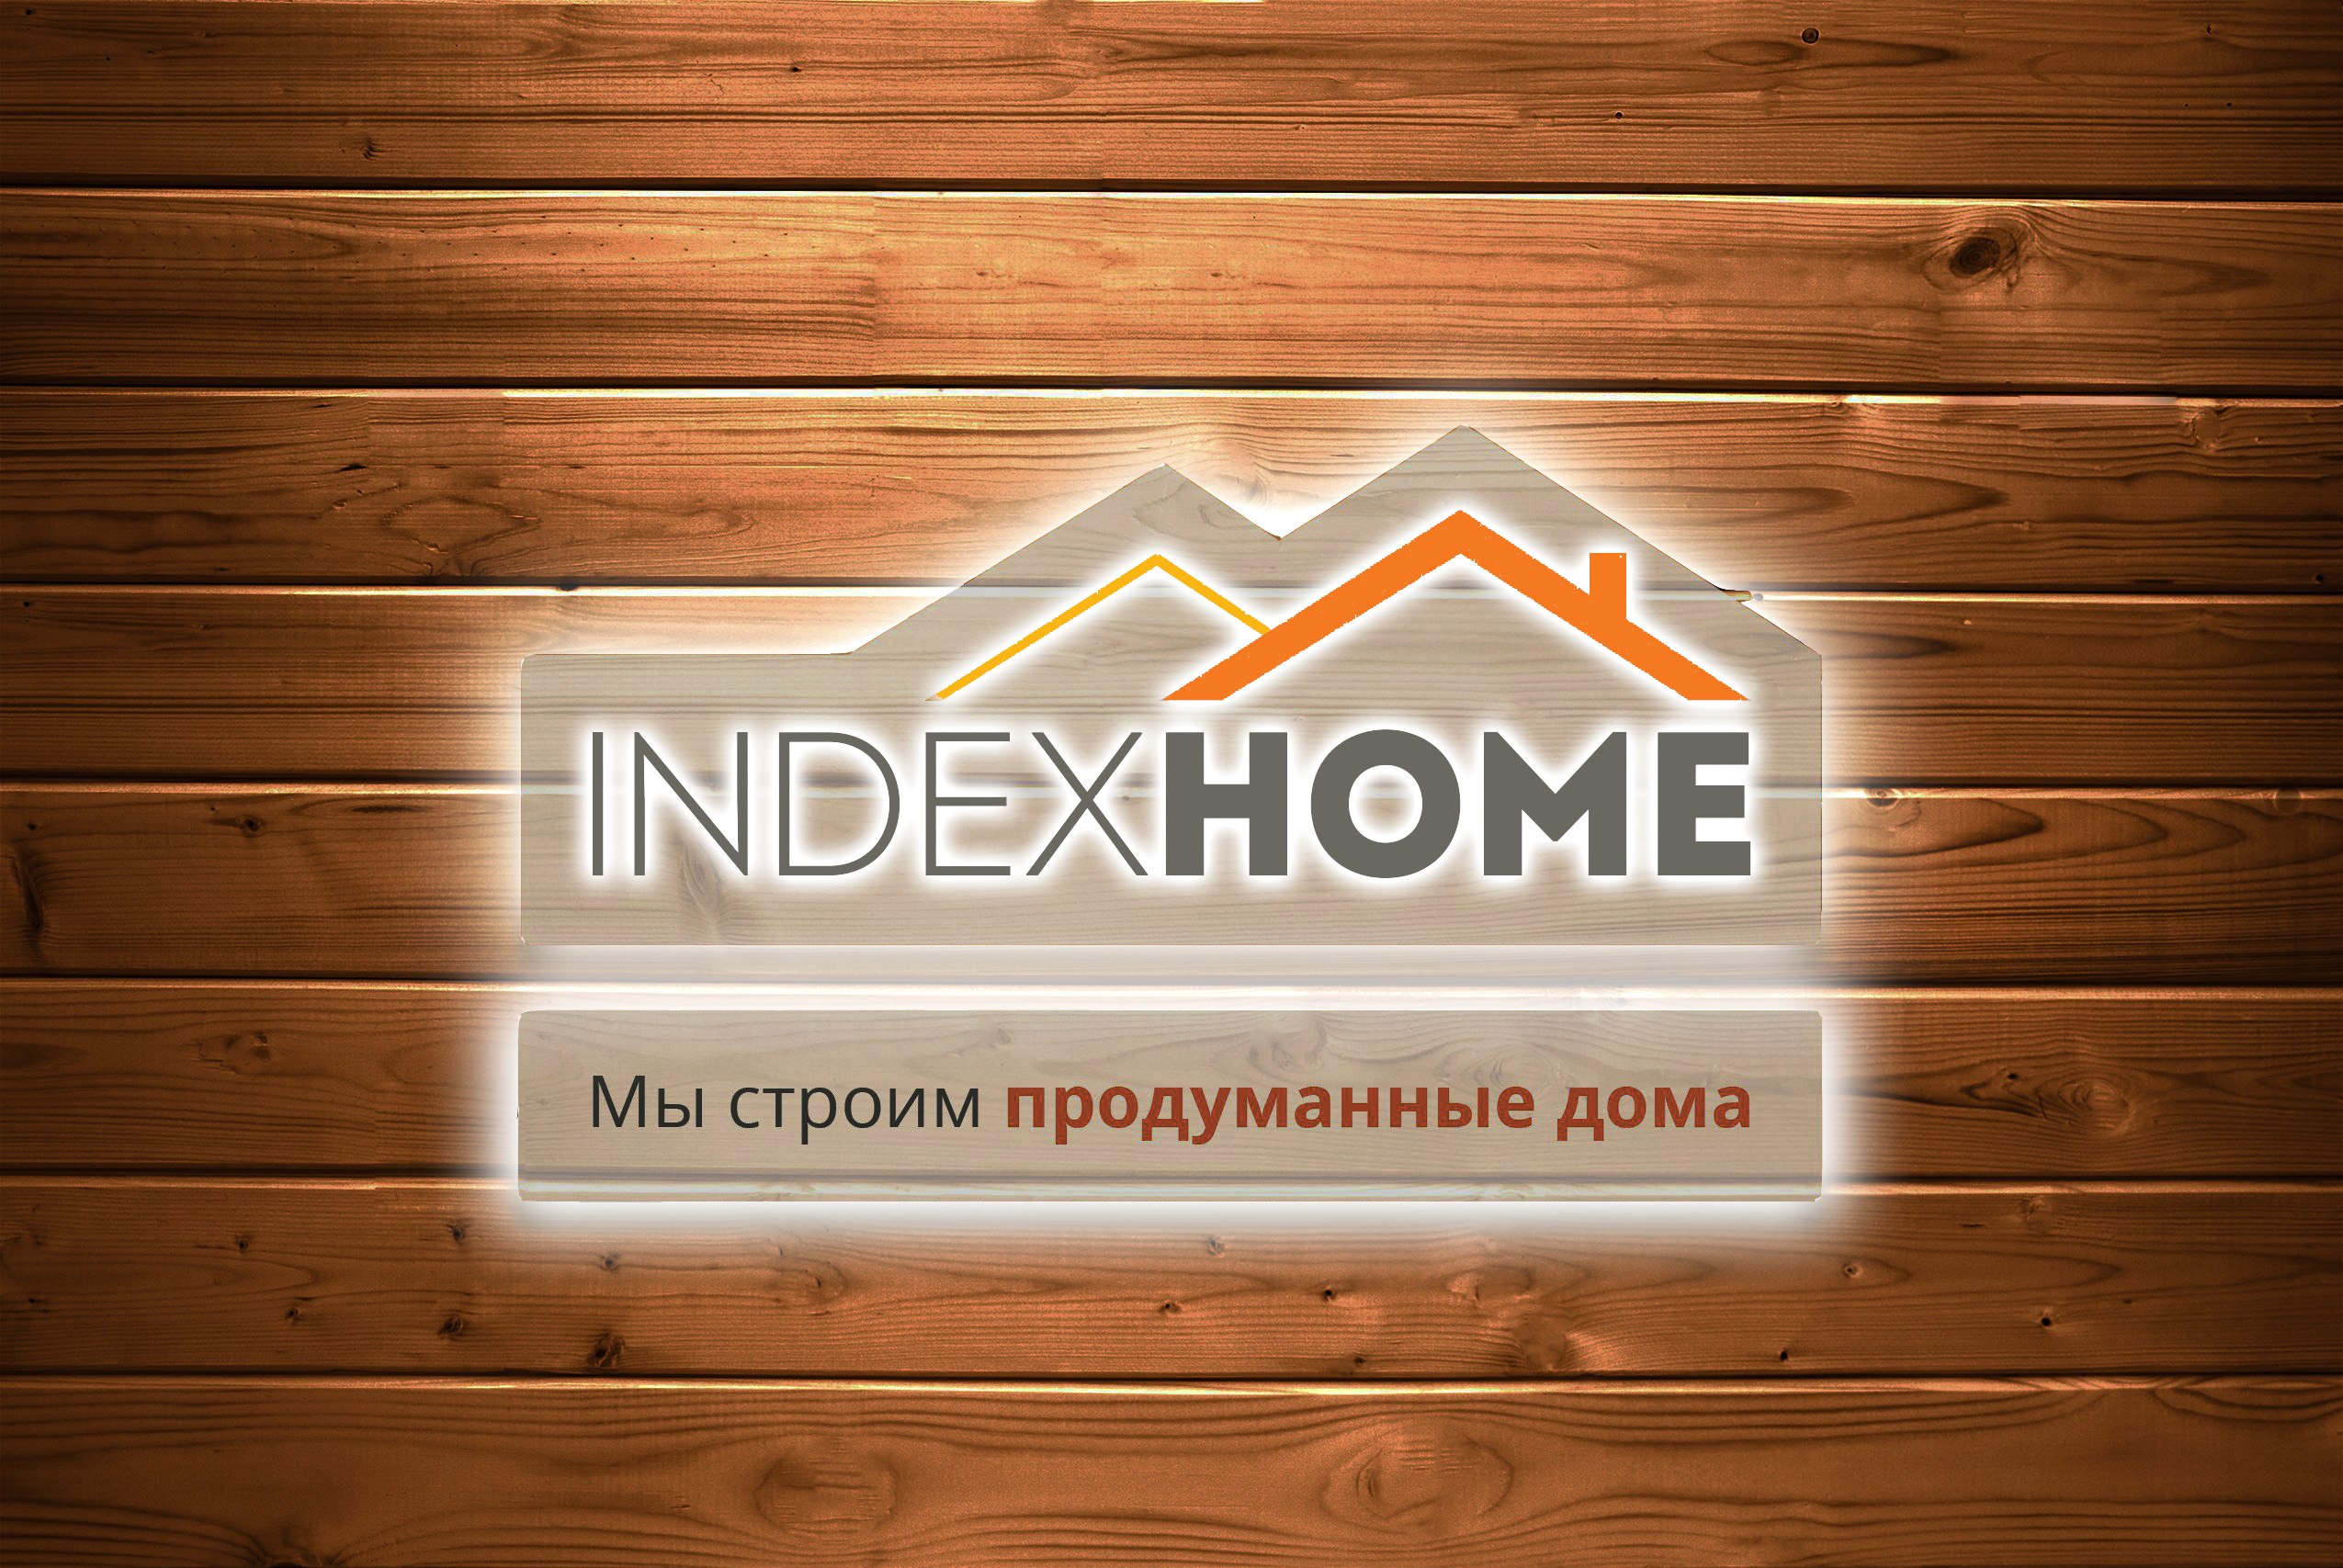 INDEX HOME - 